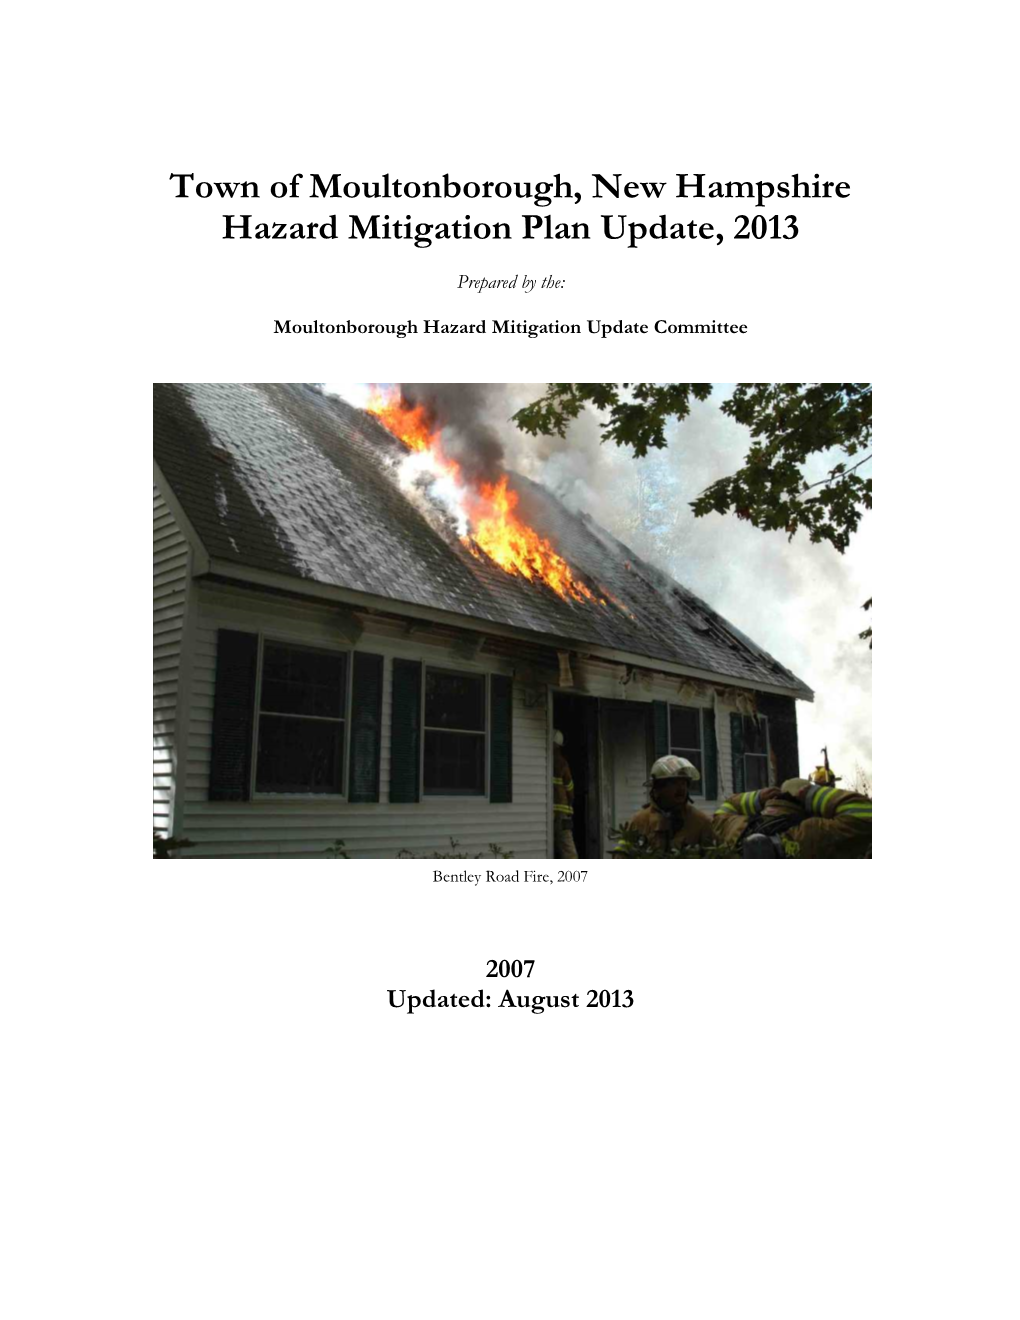 Town of Moultonborough, New Hampshire Hazard Mitigation Plan Update, 2013